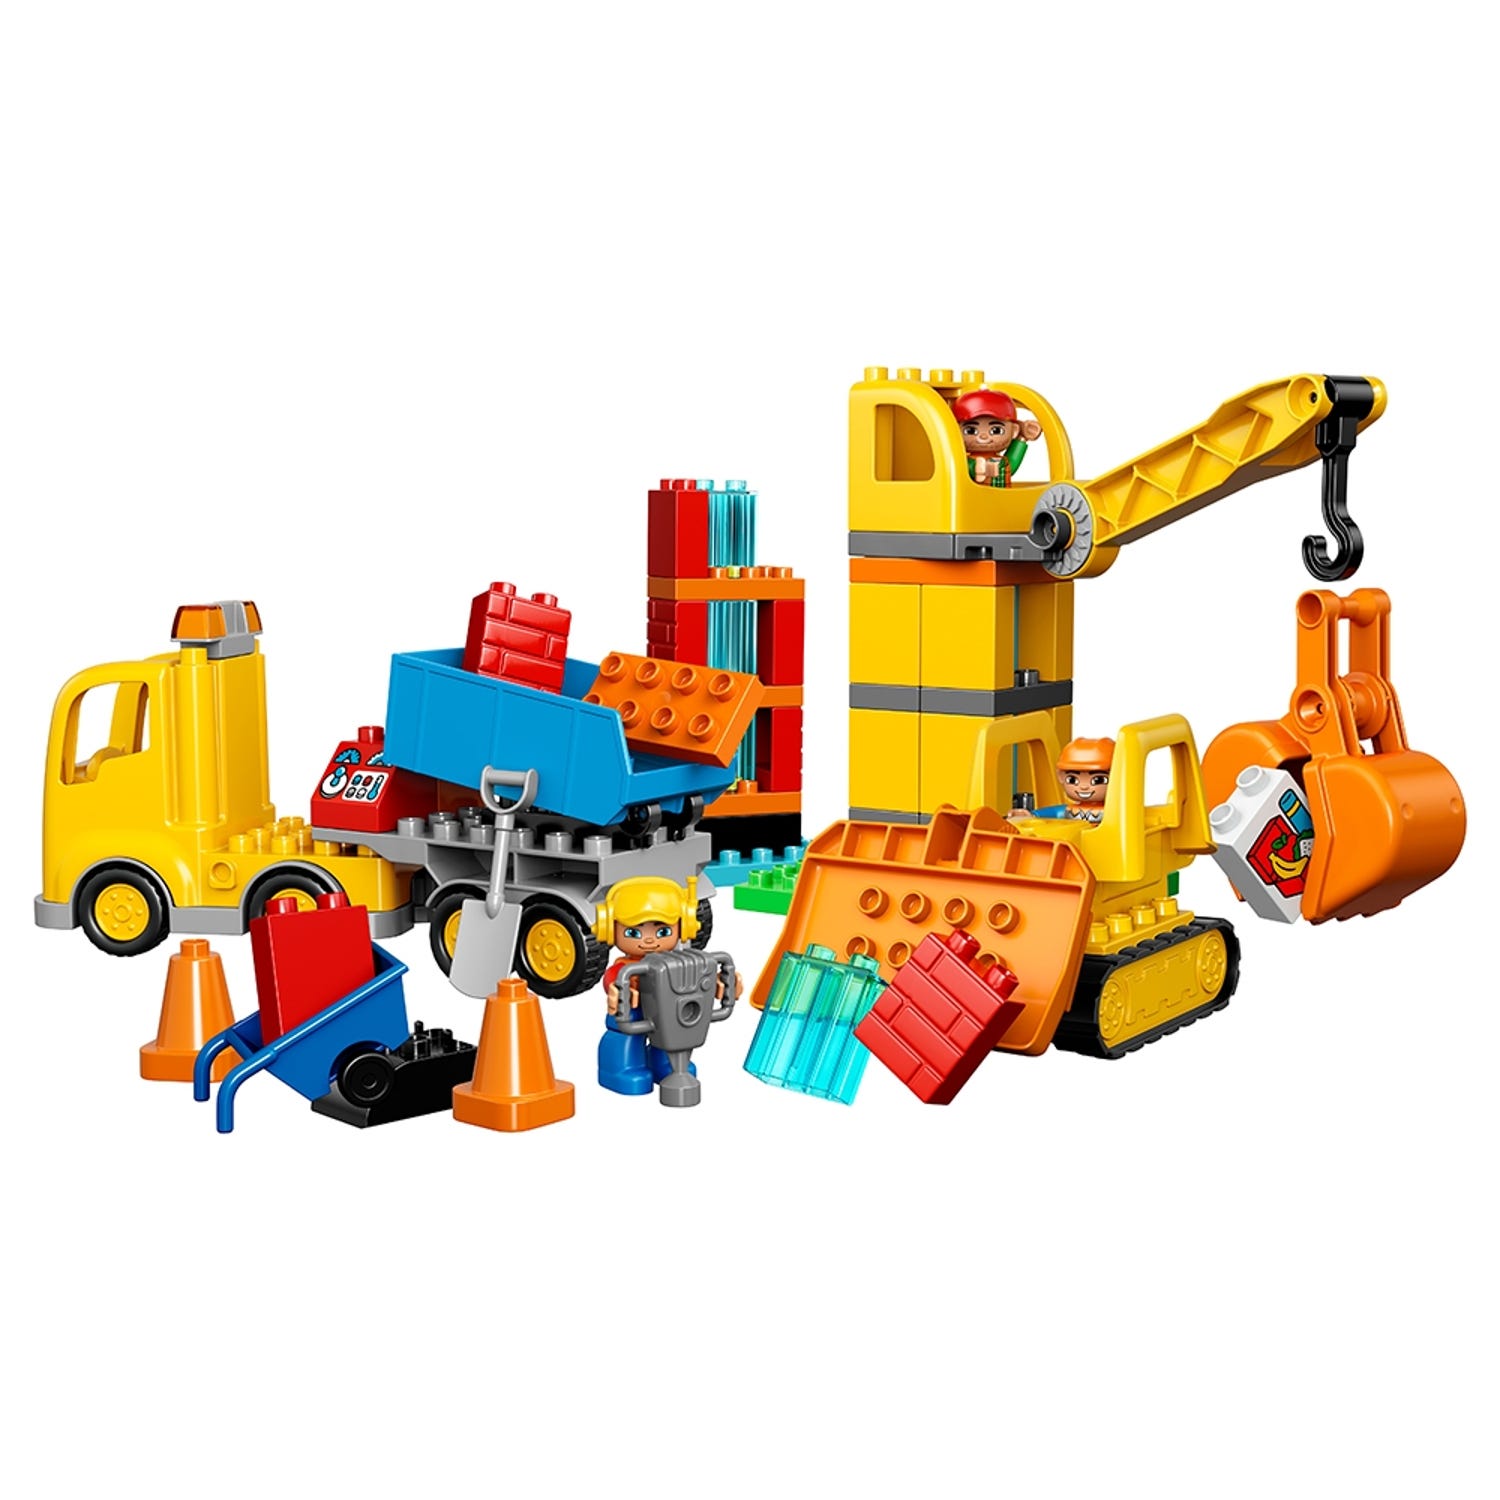 Big Construction Site 10813 | DUPLO® | online at the Official LEGO® Shop US